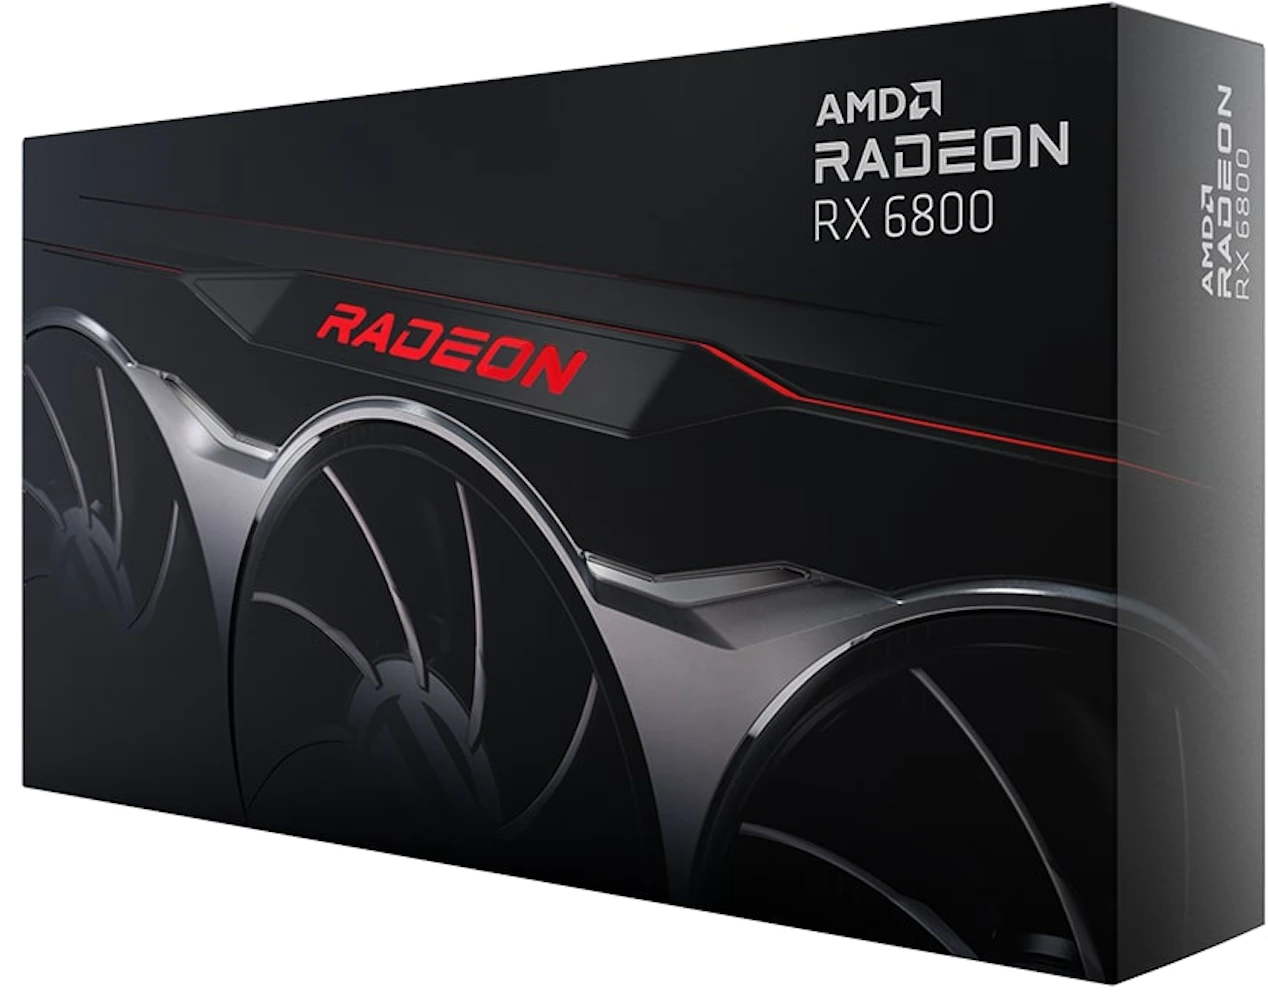 AMD Radeon RX 6800 Graphics Card -